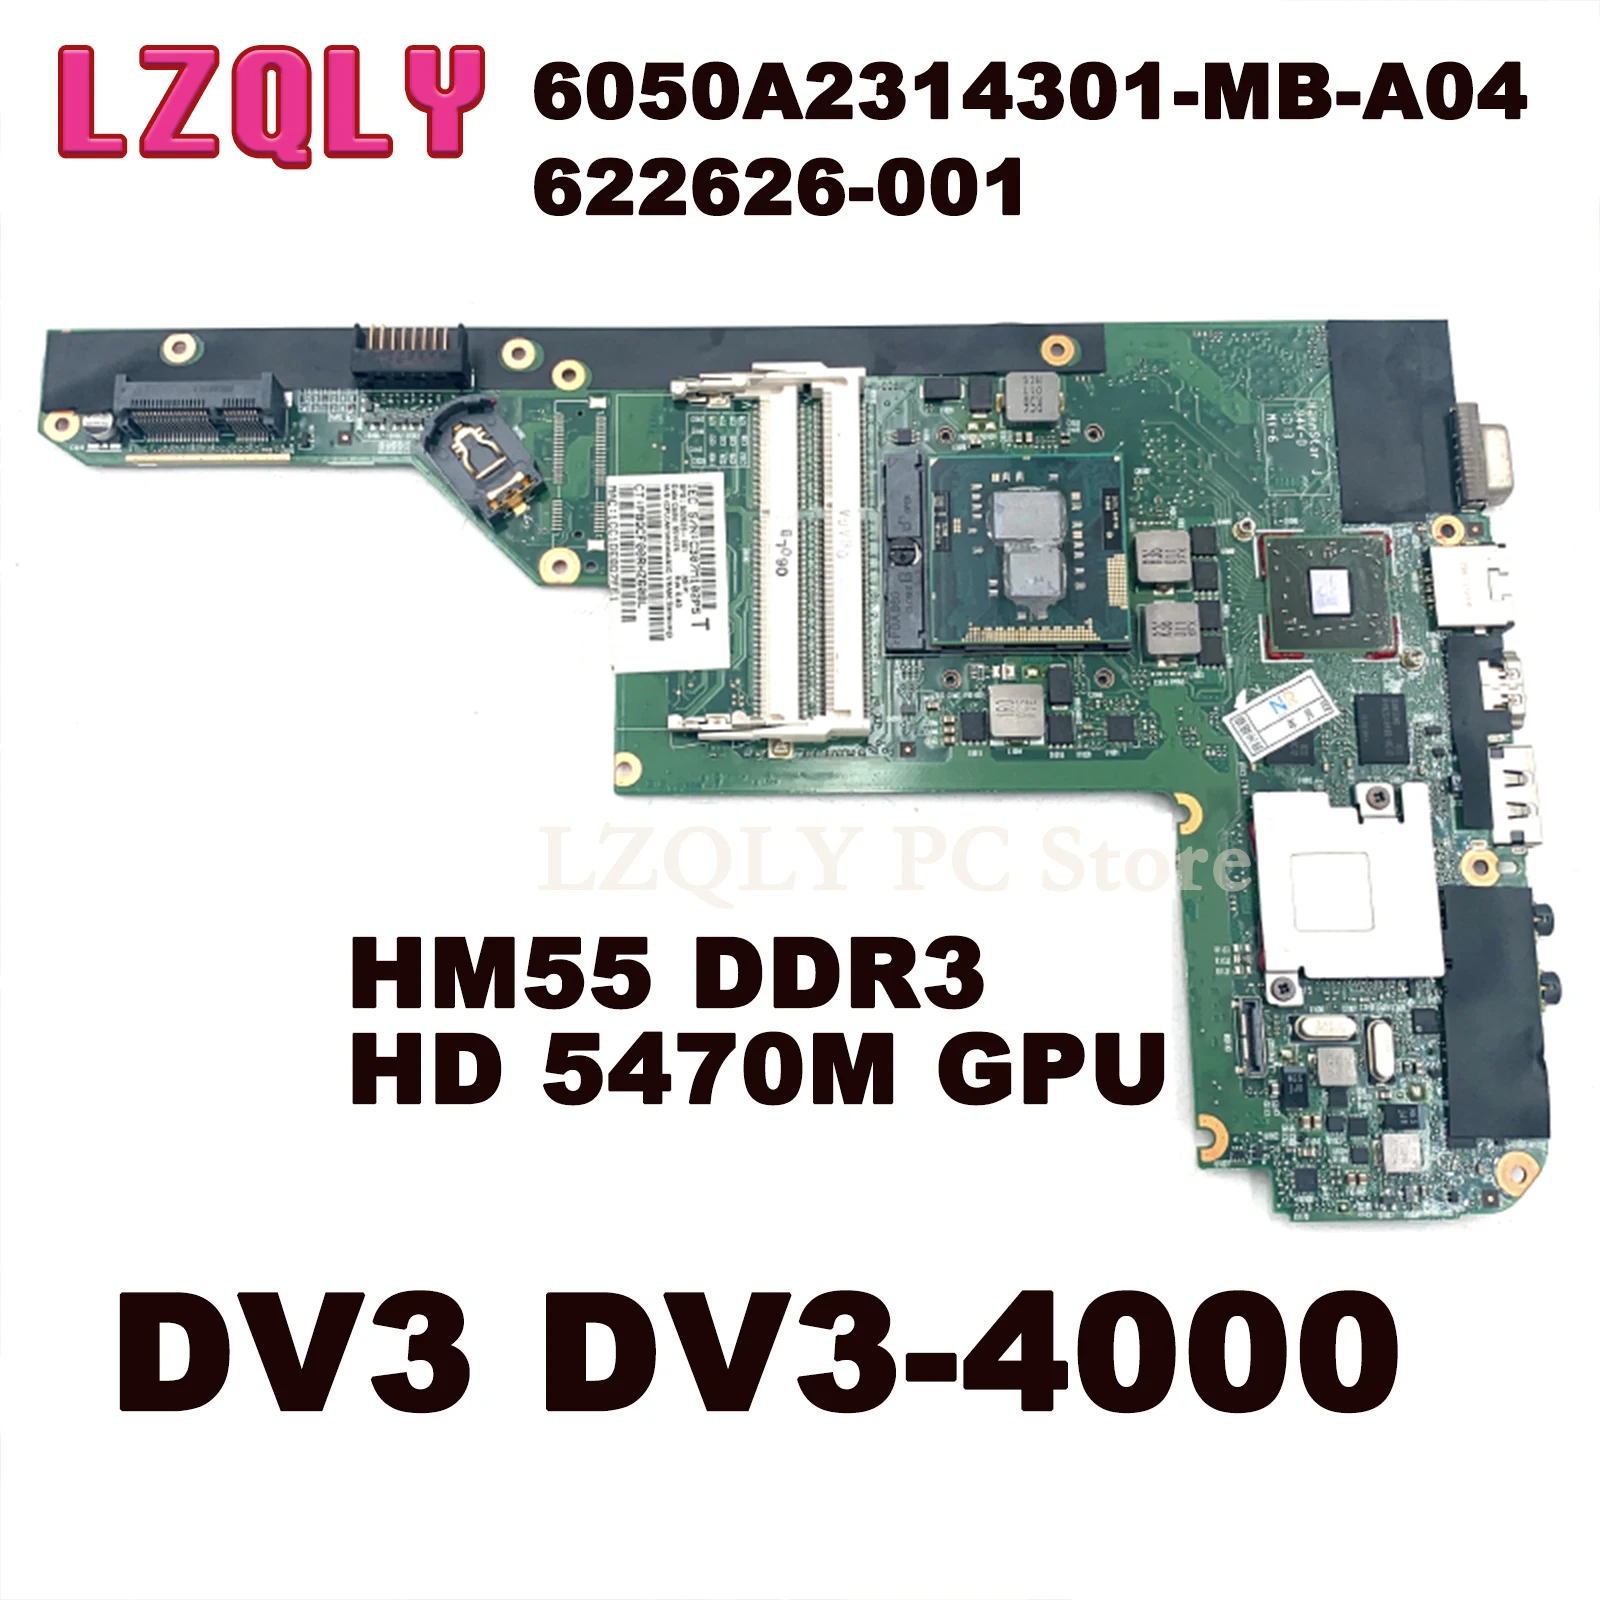 

LZQLY For HP DV3 DV3-4000 Laptop Motherboard 6050A2314301-MB-A04 622626-001 HM55 DDR3 HD 5470M GPU Free CPU Main Board